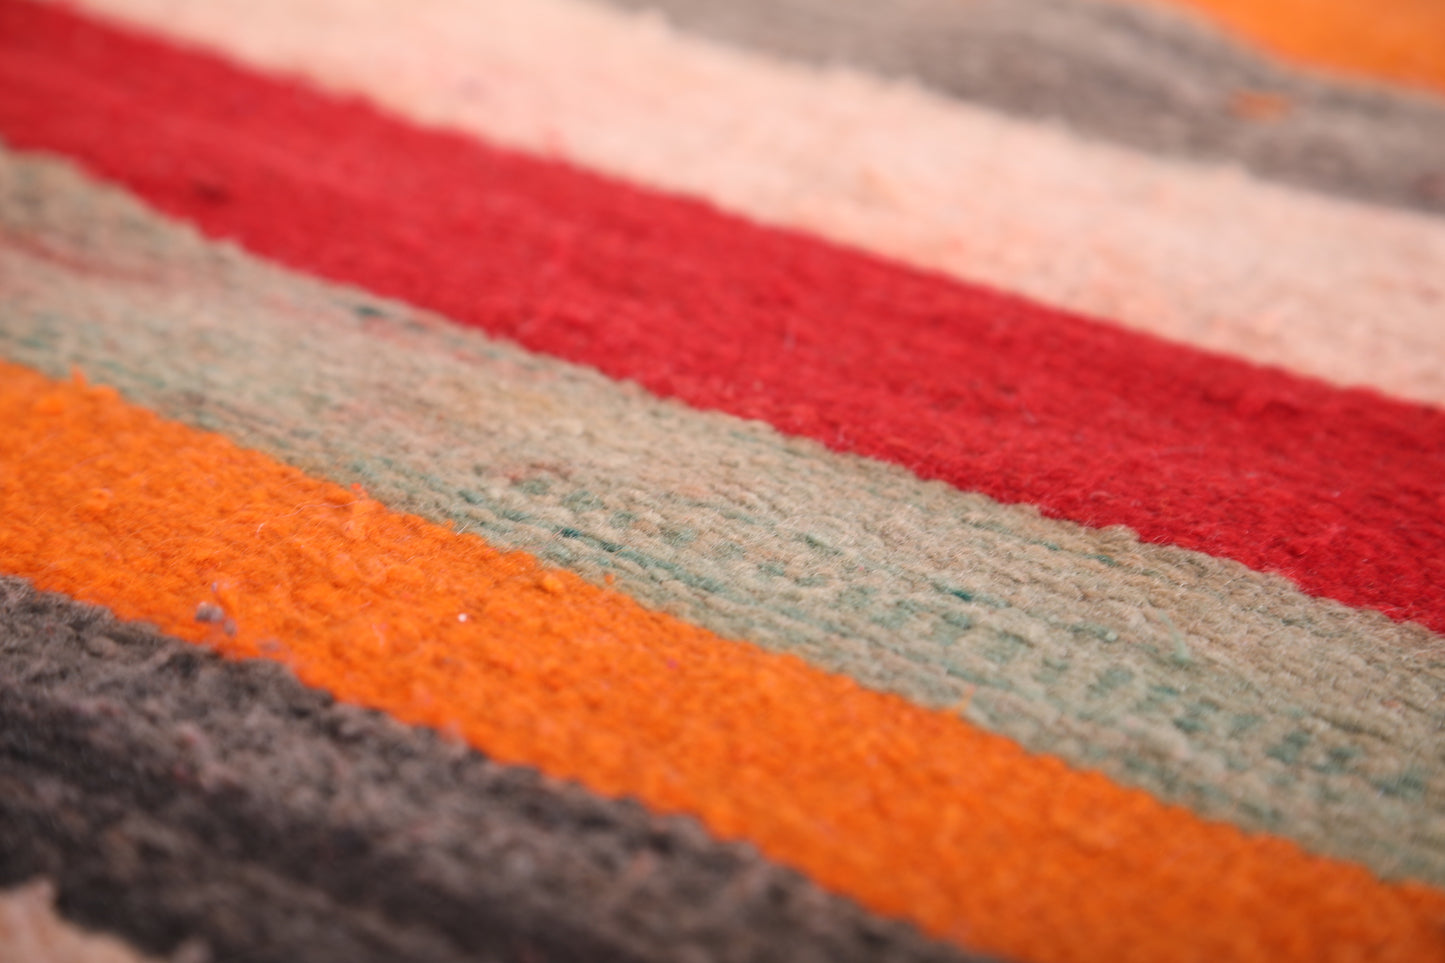 Large striped rug 5.9 X 11.4 Feet